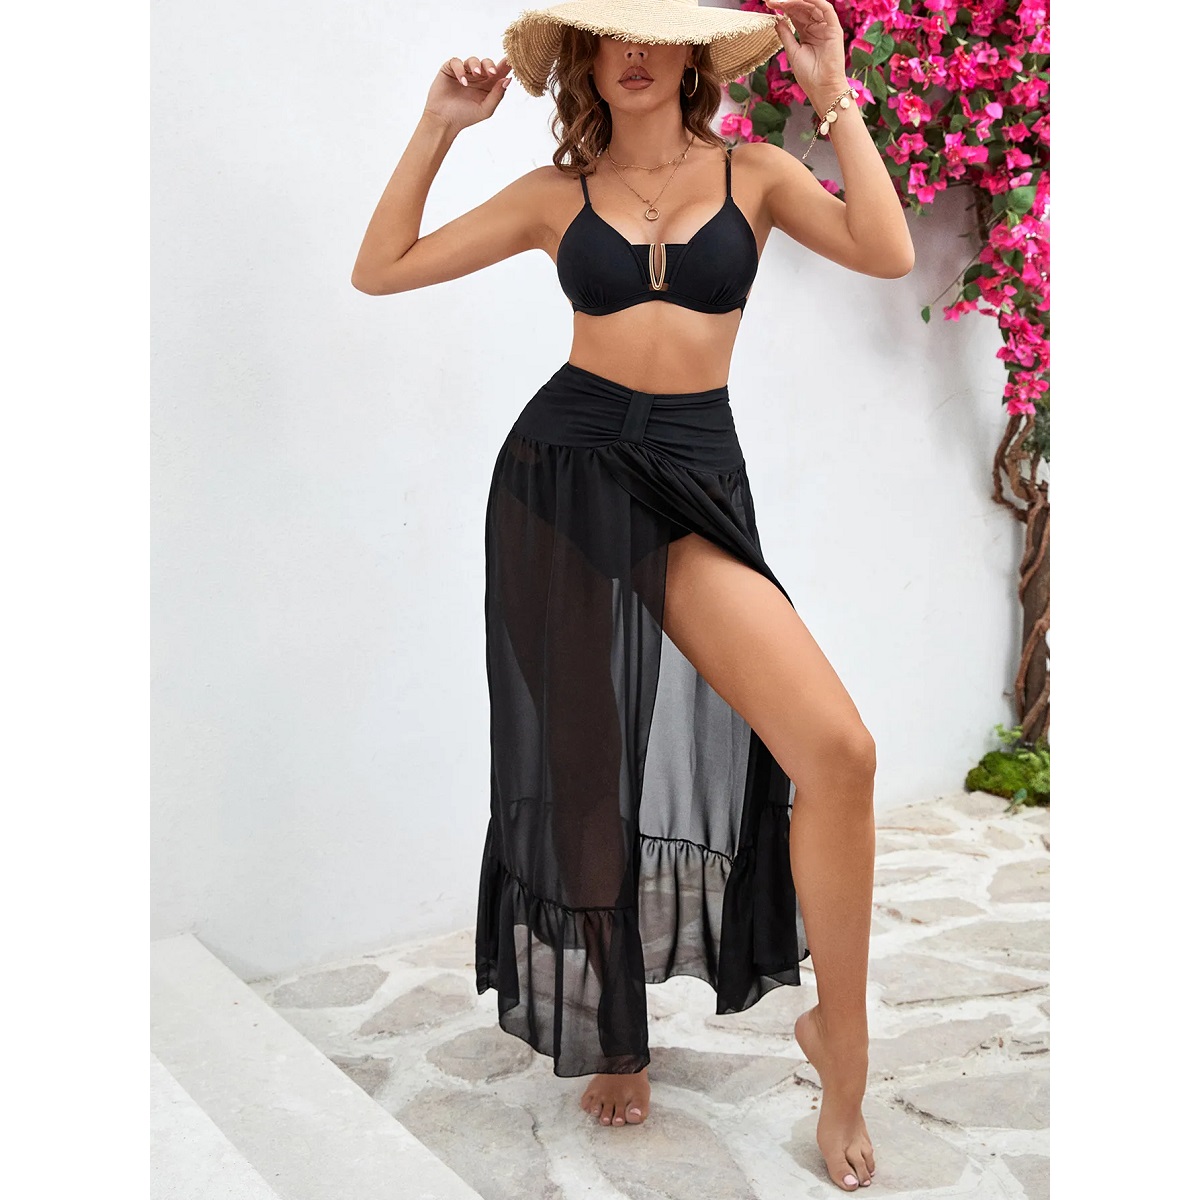 Black Push up 3 Piece Bikini Set with Long Skirt - Swimwear India